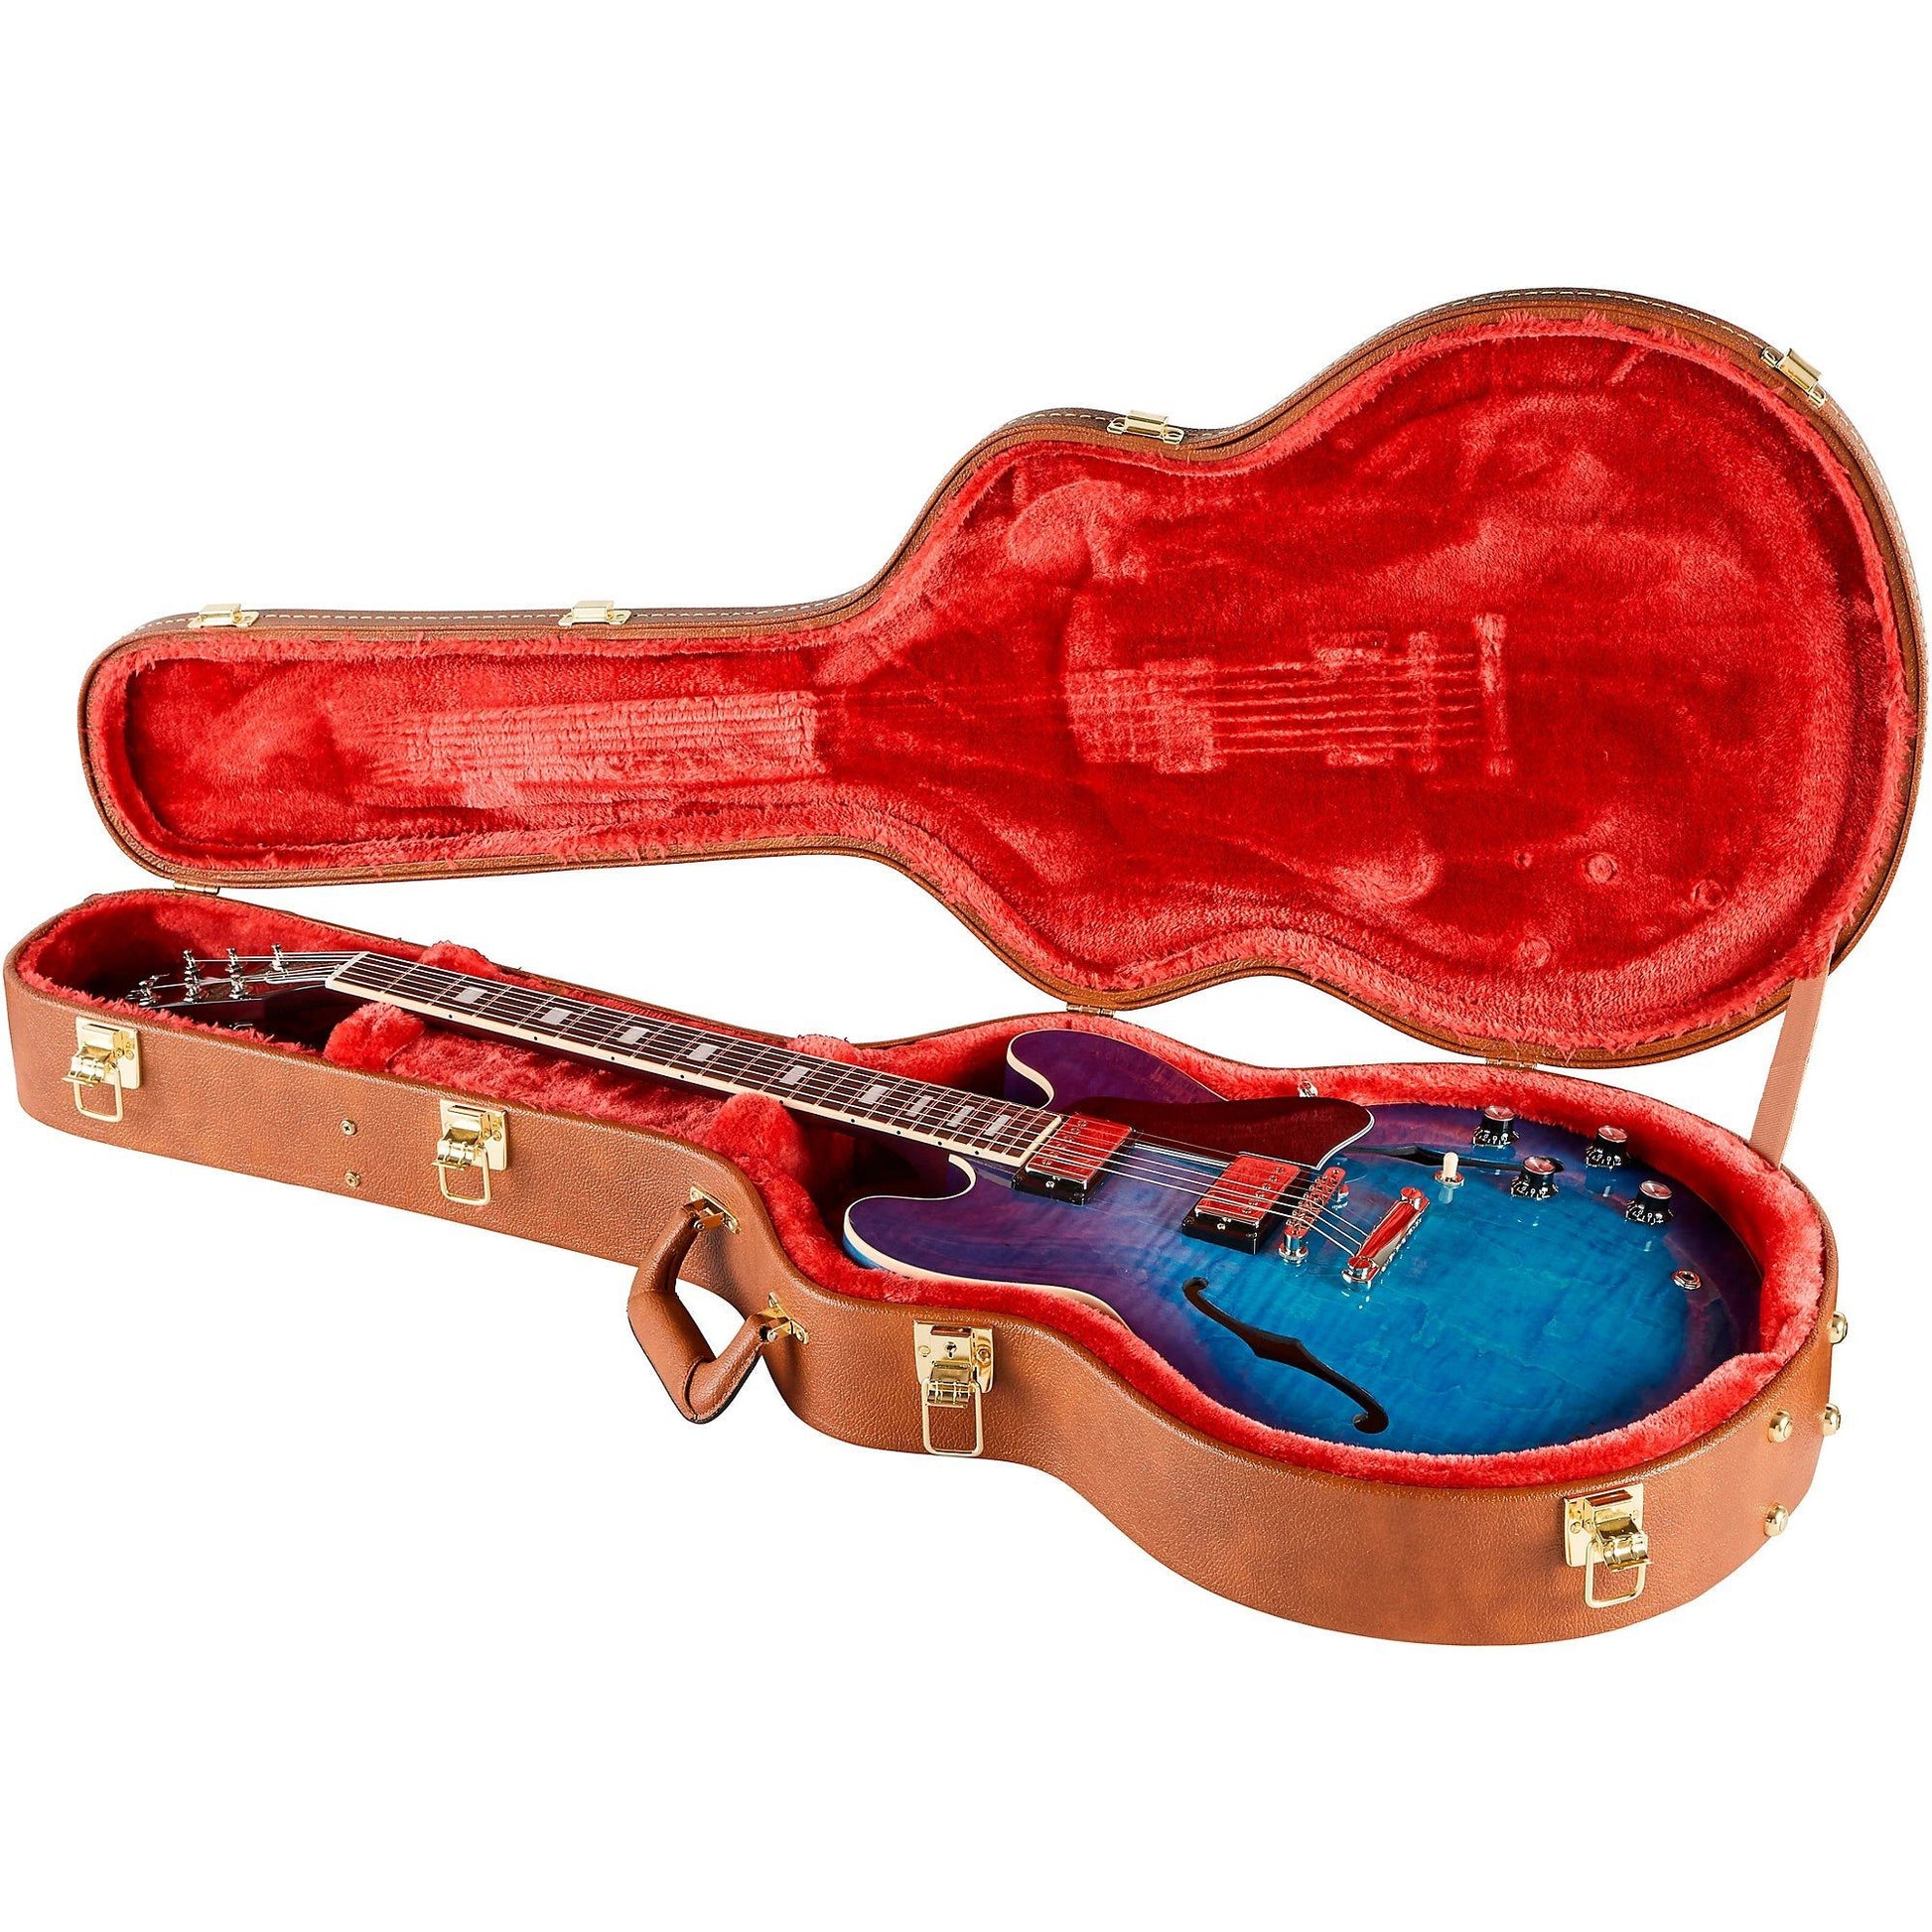 Đàn Guitar Điện Gibson Figured Limited Edition Semi Hollow, Blueberry Burst - Việt Music